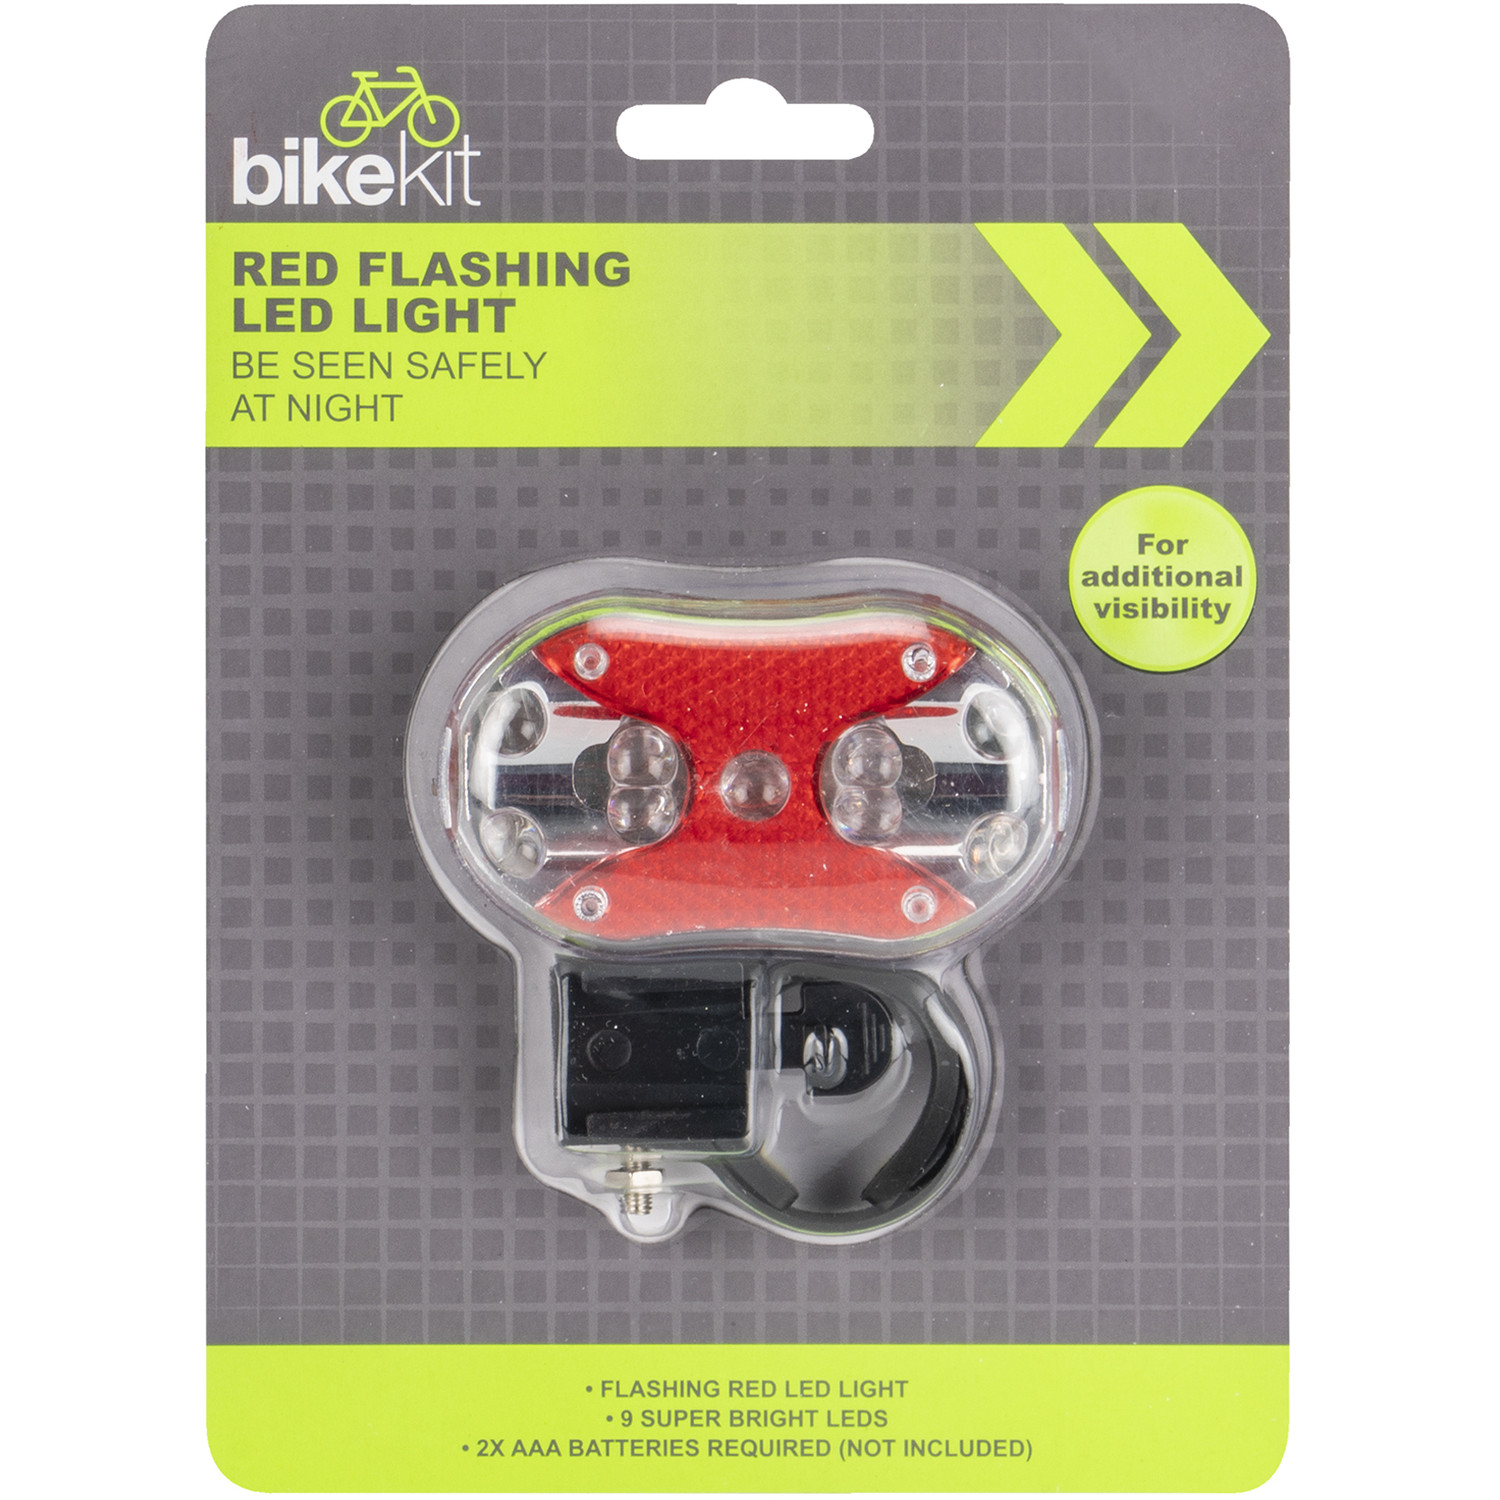 Red Flashing LED Image